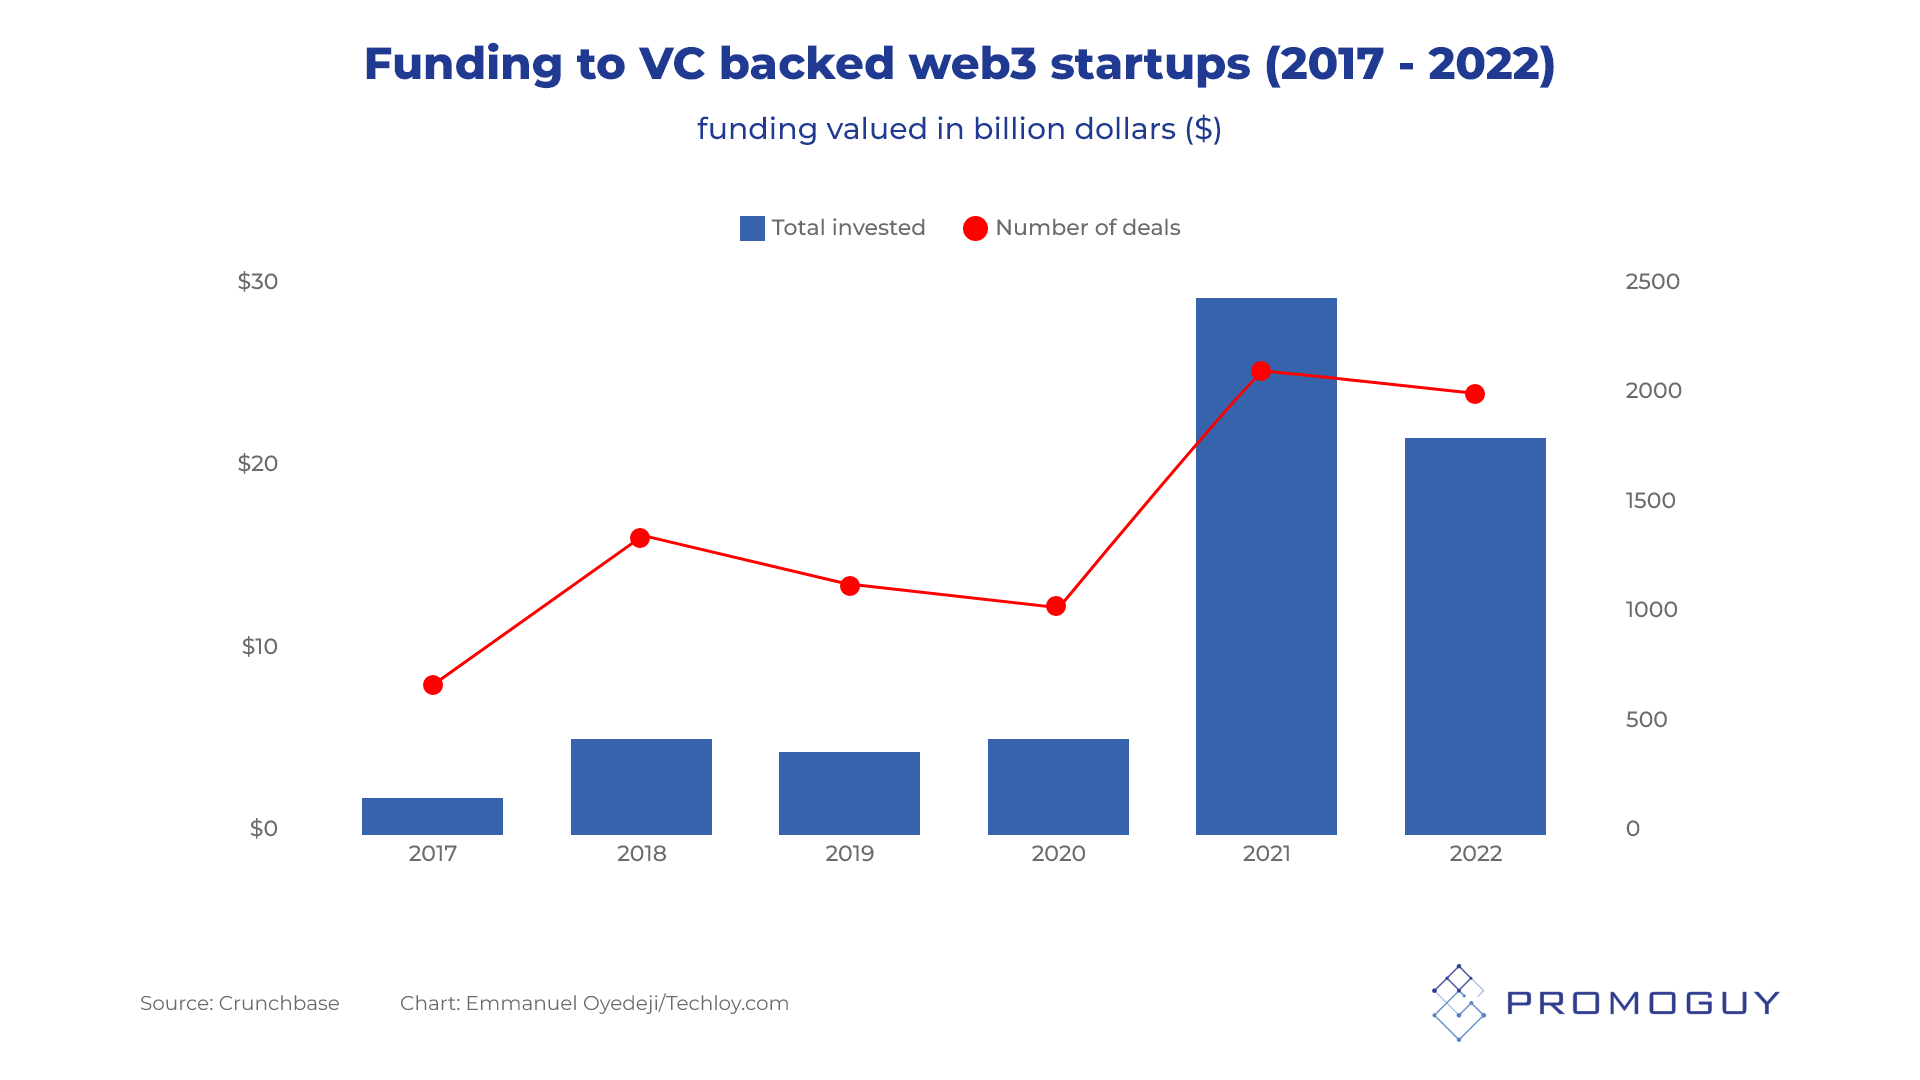 VC Funding We3 Startups